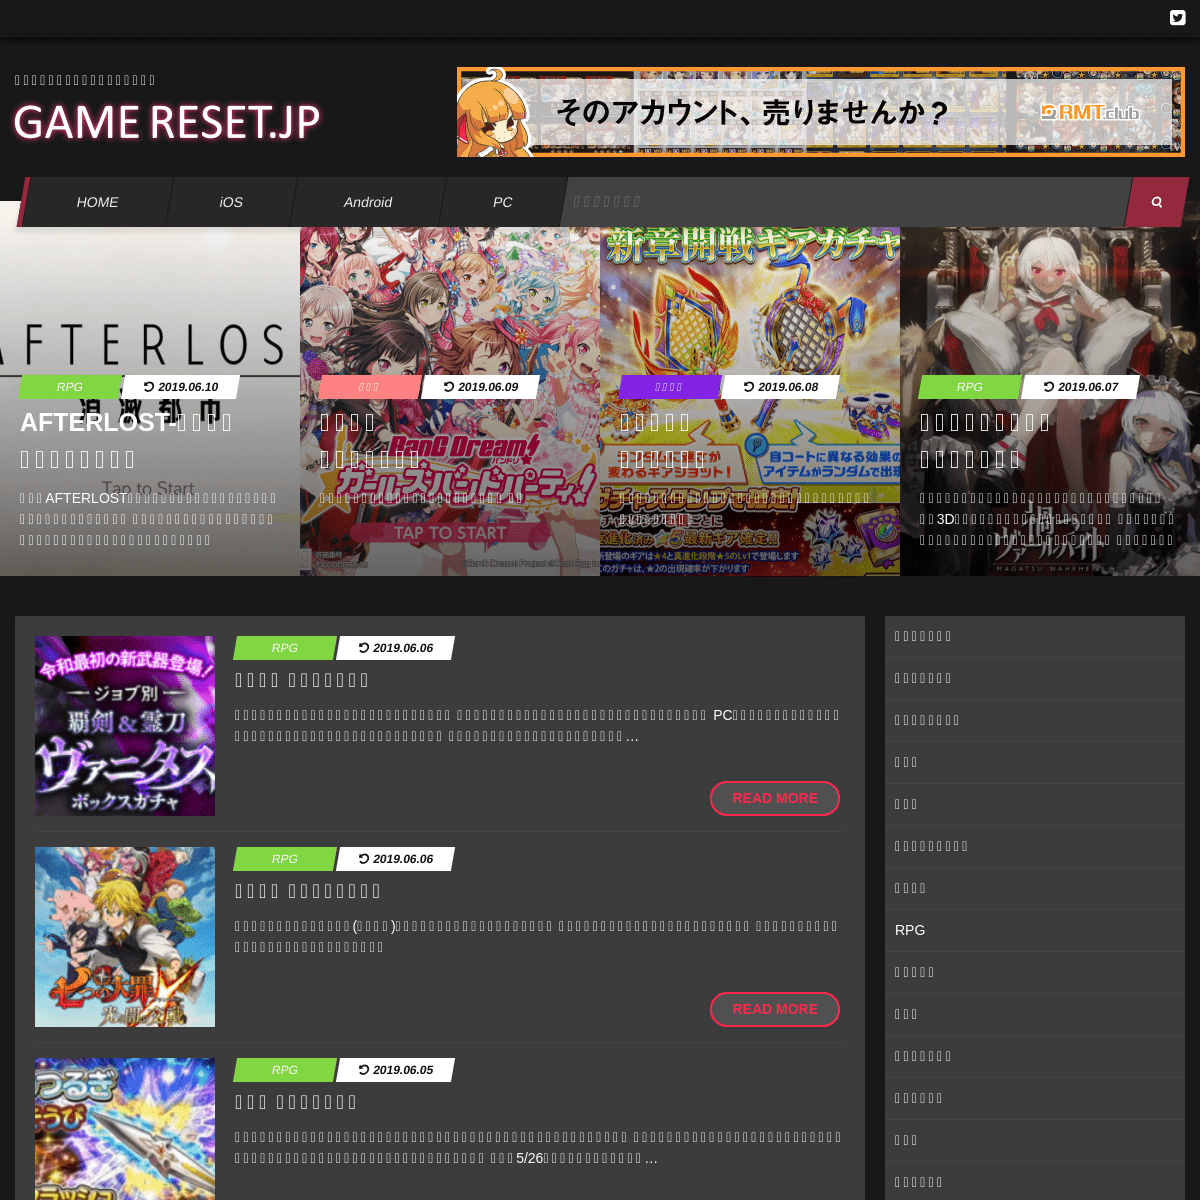 A complete backup of gamereset.jp